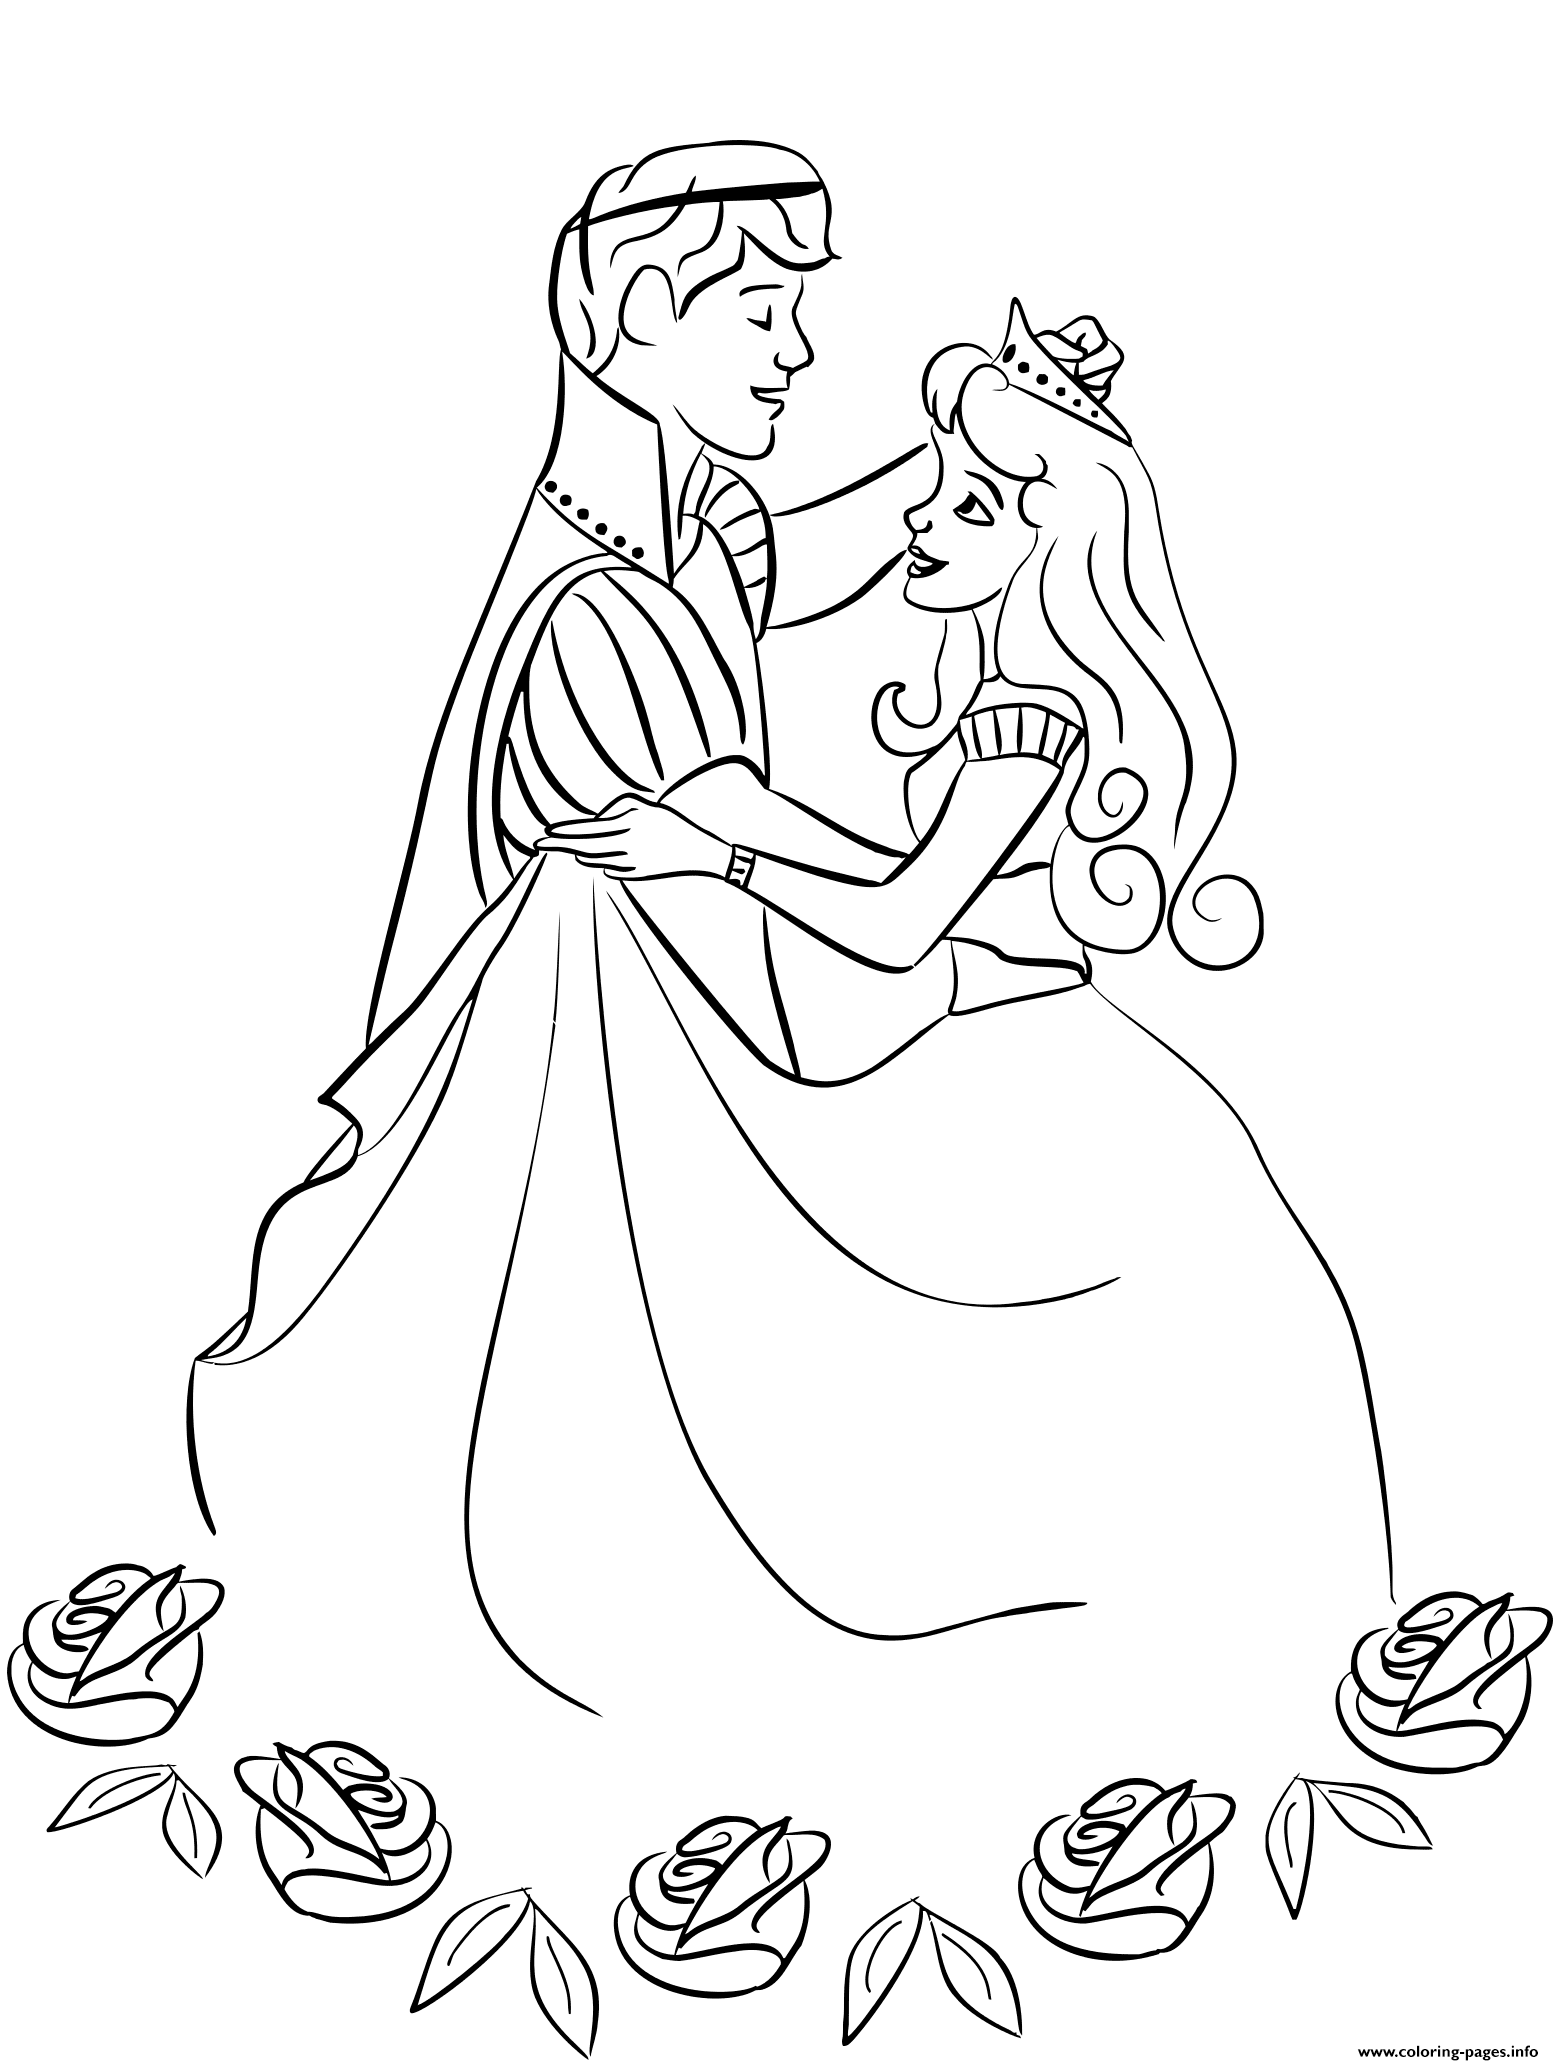 Prince And Princess Dancing coloring